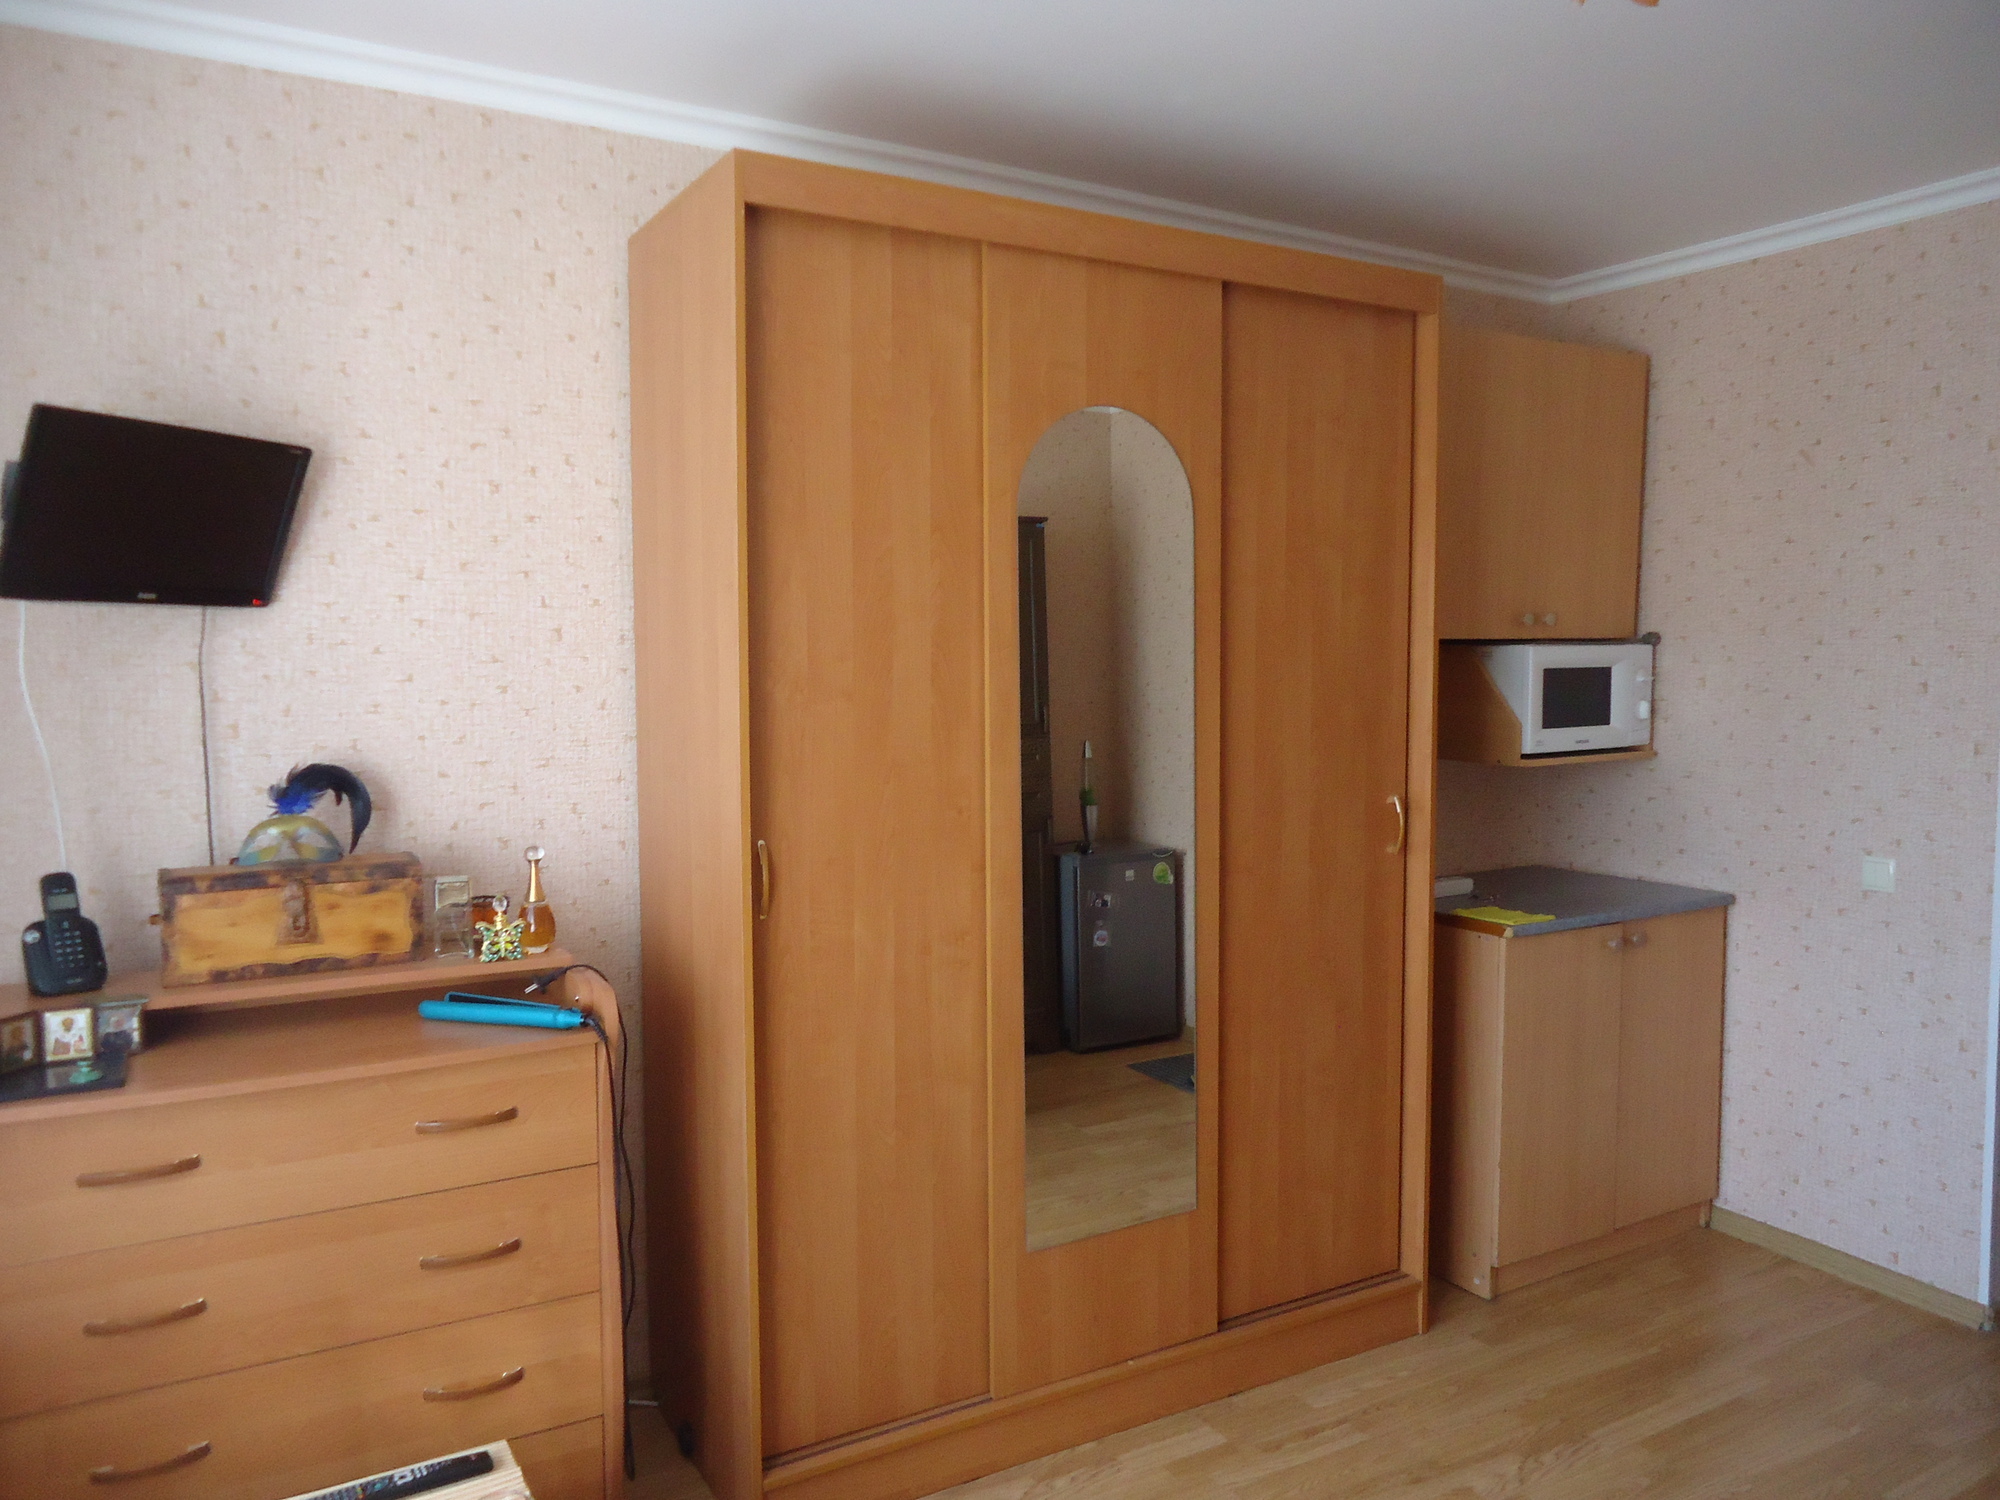 Снять комнату в общежитии в Обнинске без посредников от хозяина